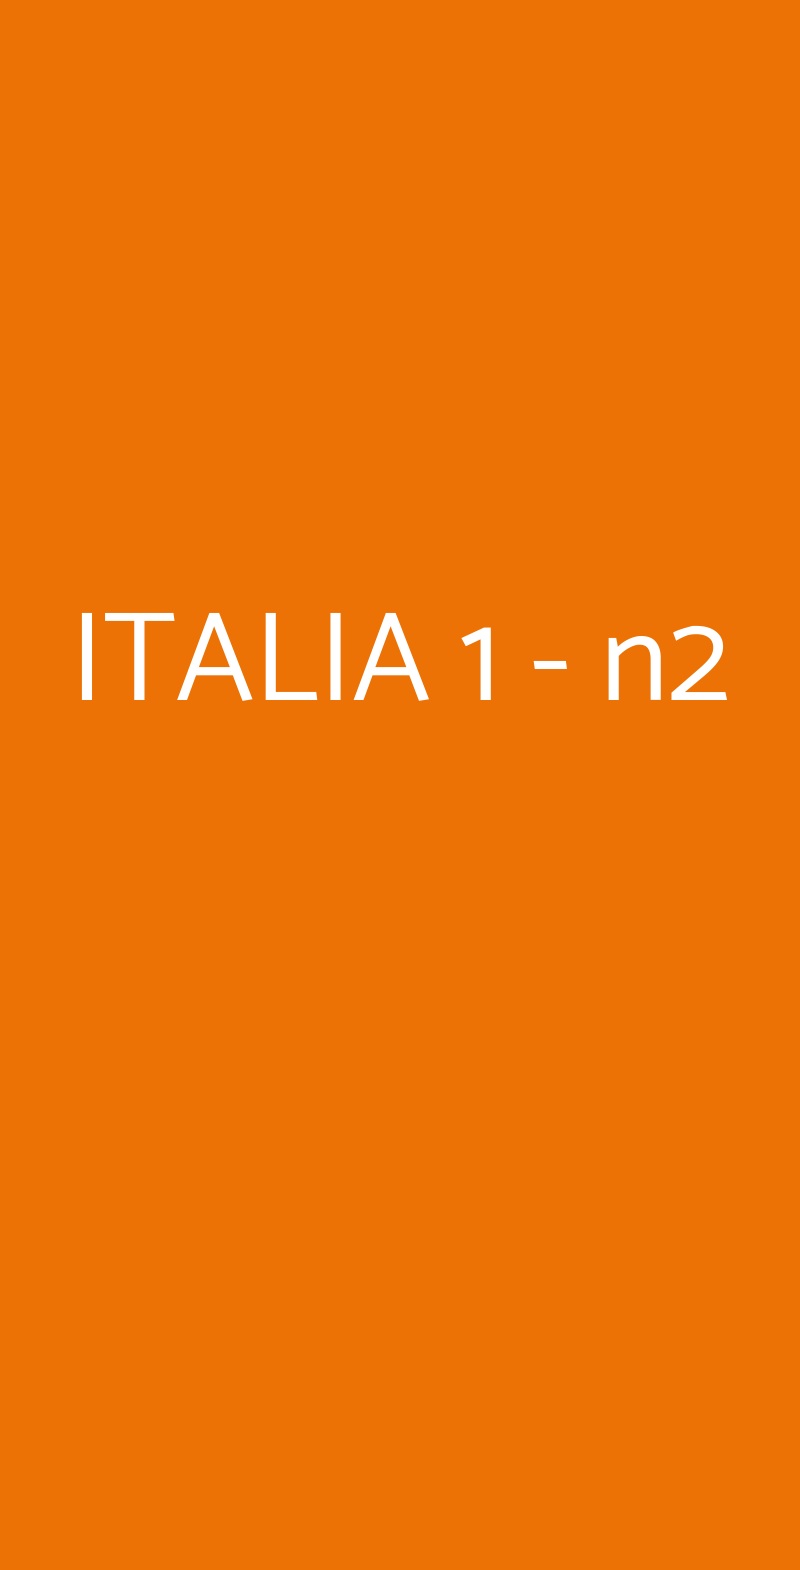 ITALIA 1 - n2 Milano menù 1 pagina